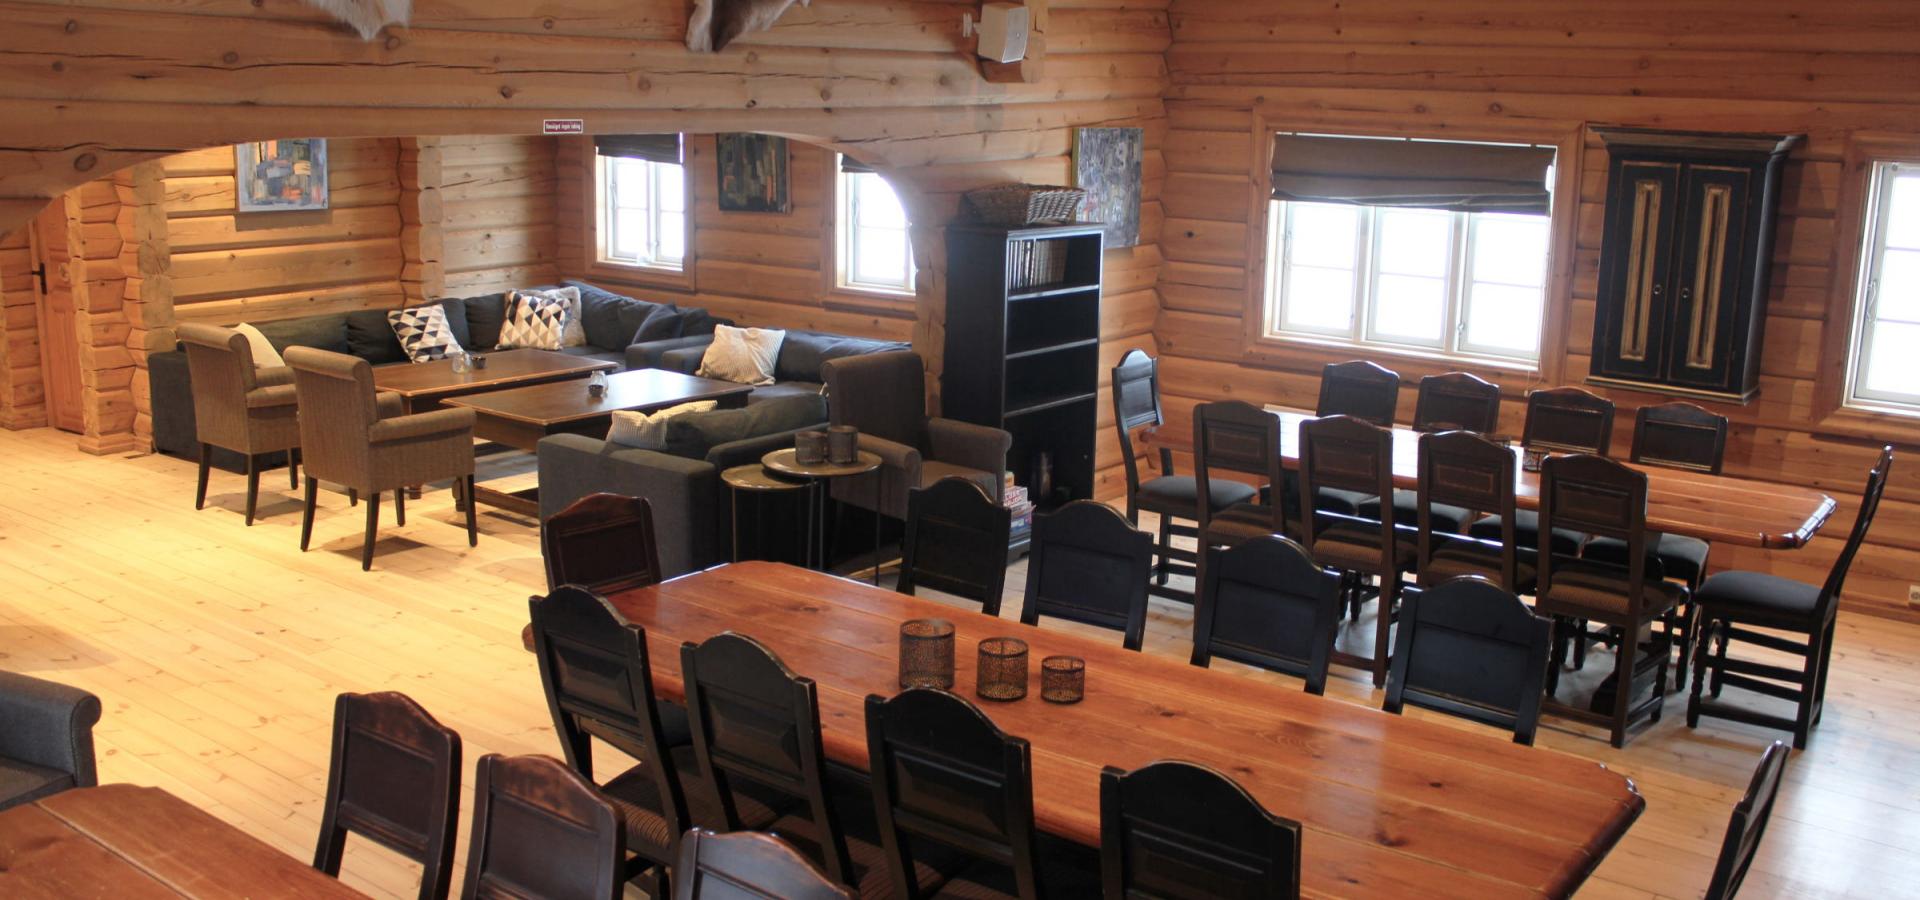 Hafjell Lodge 31